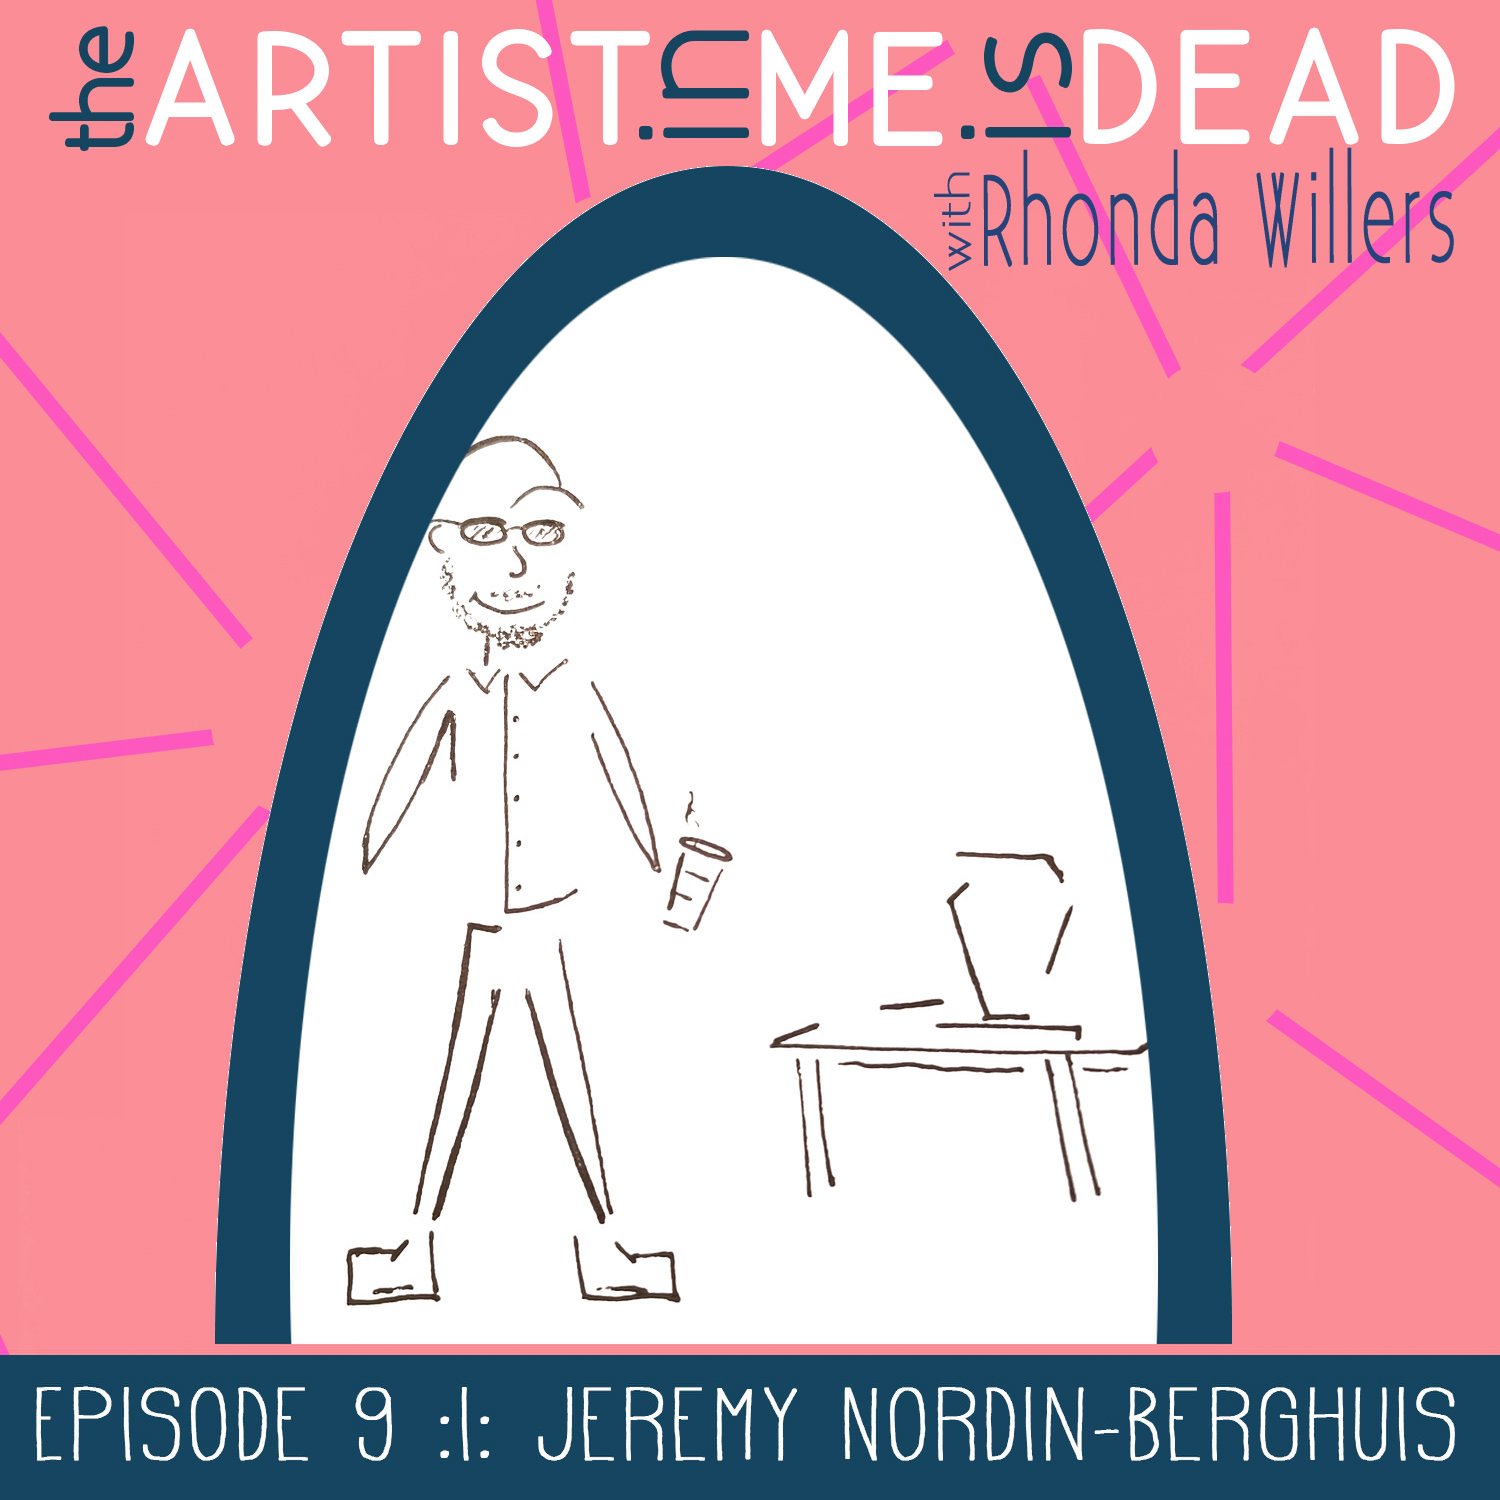 01_episode9_jeremy_nordin-berghuis_the-artist-in-me-is-dead-podcast_season1.jpeg